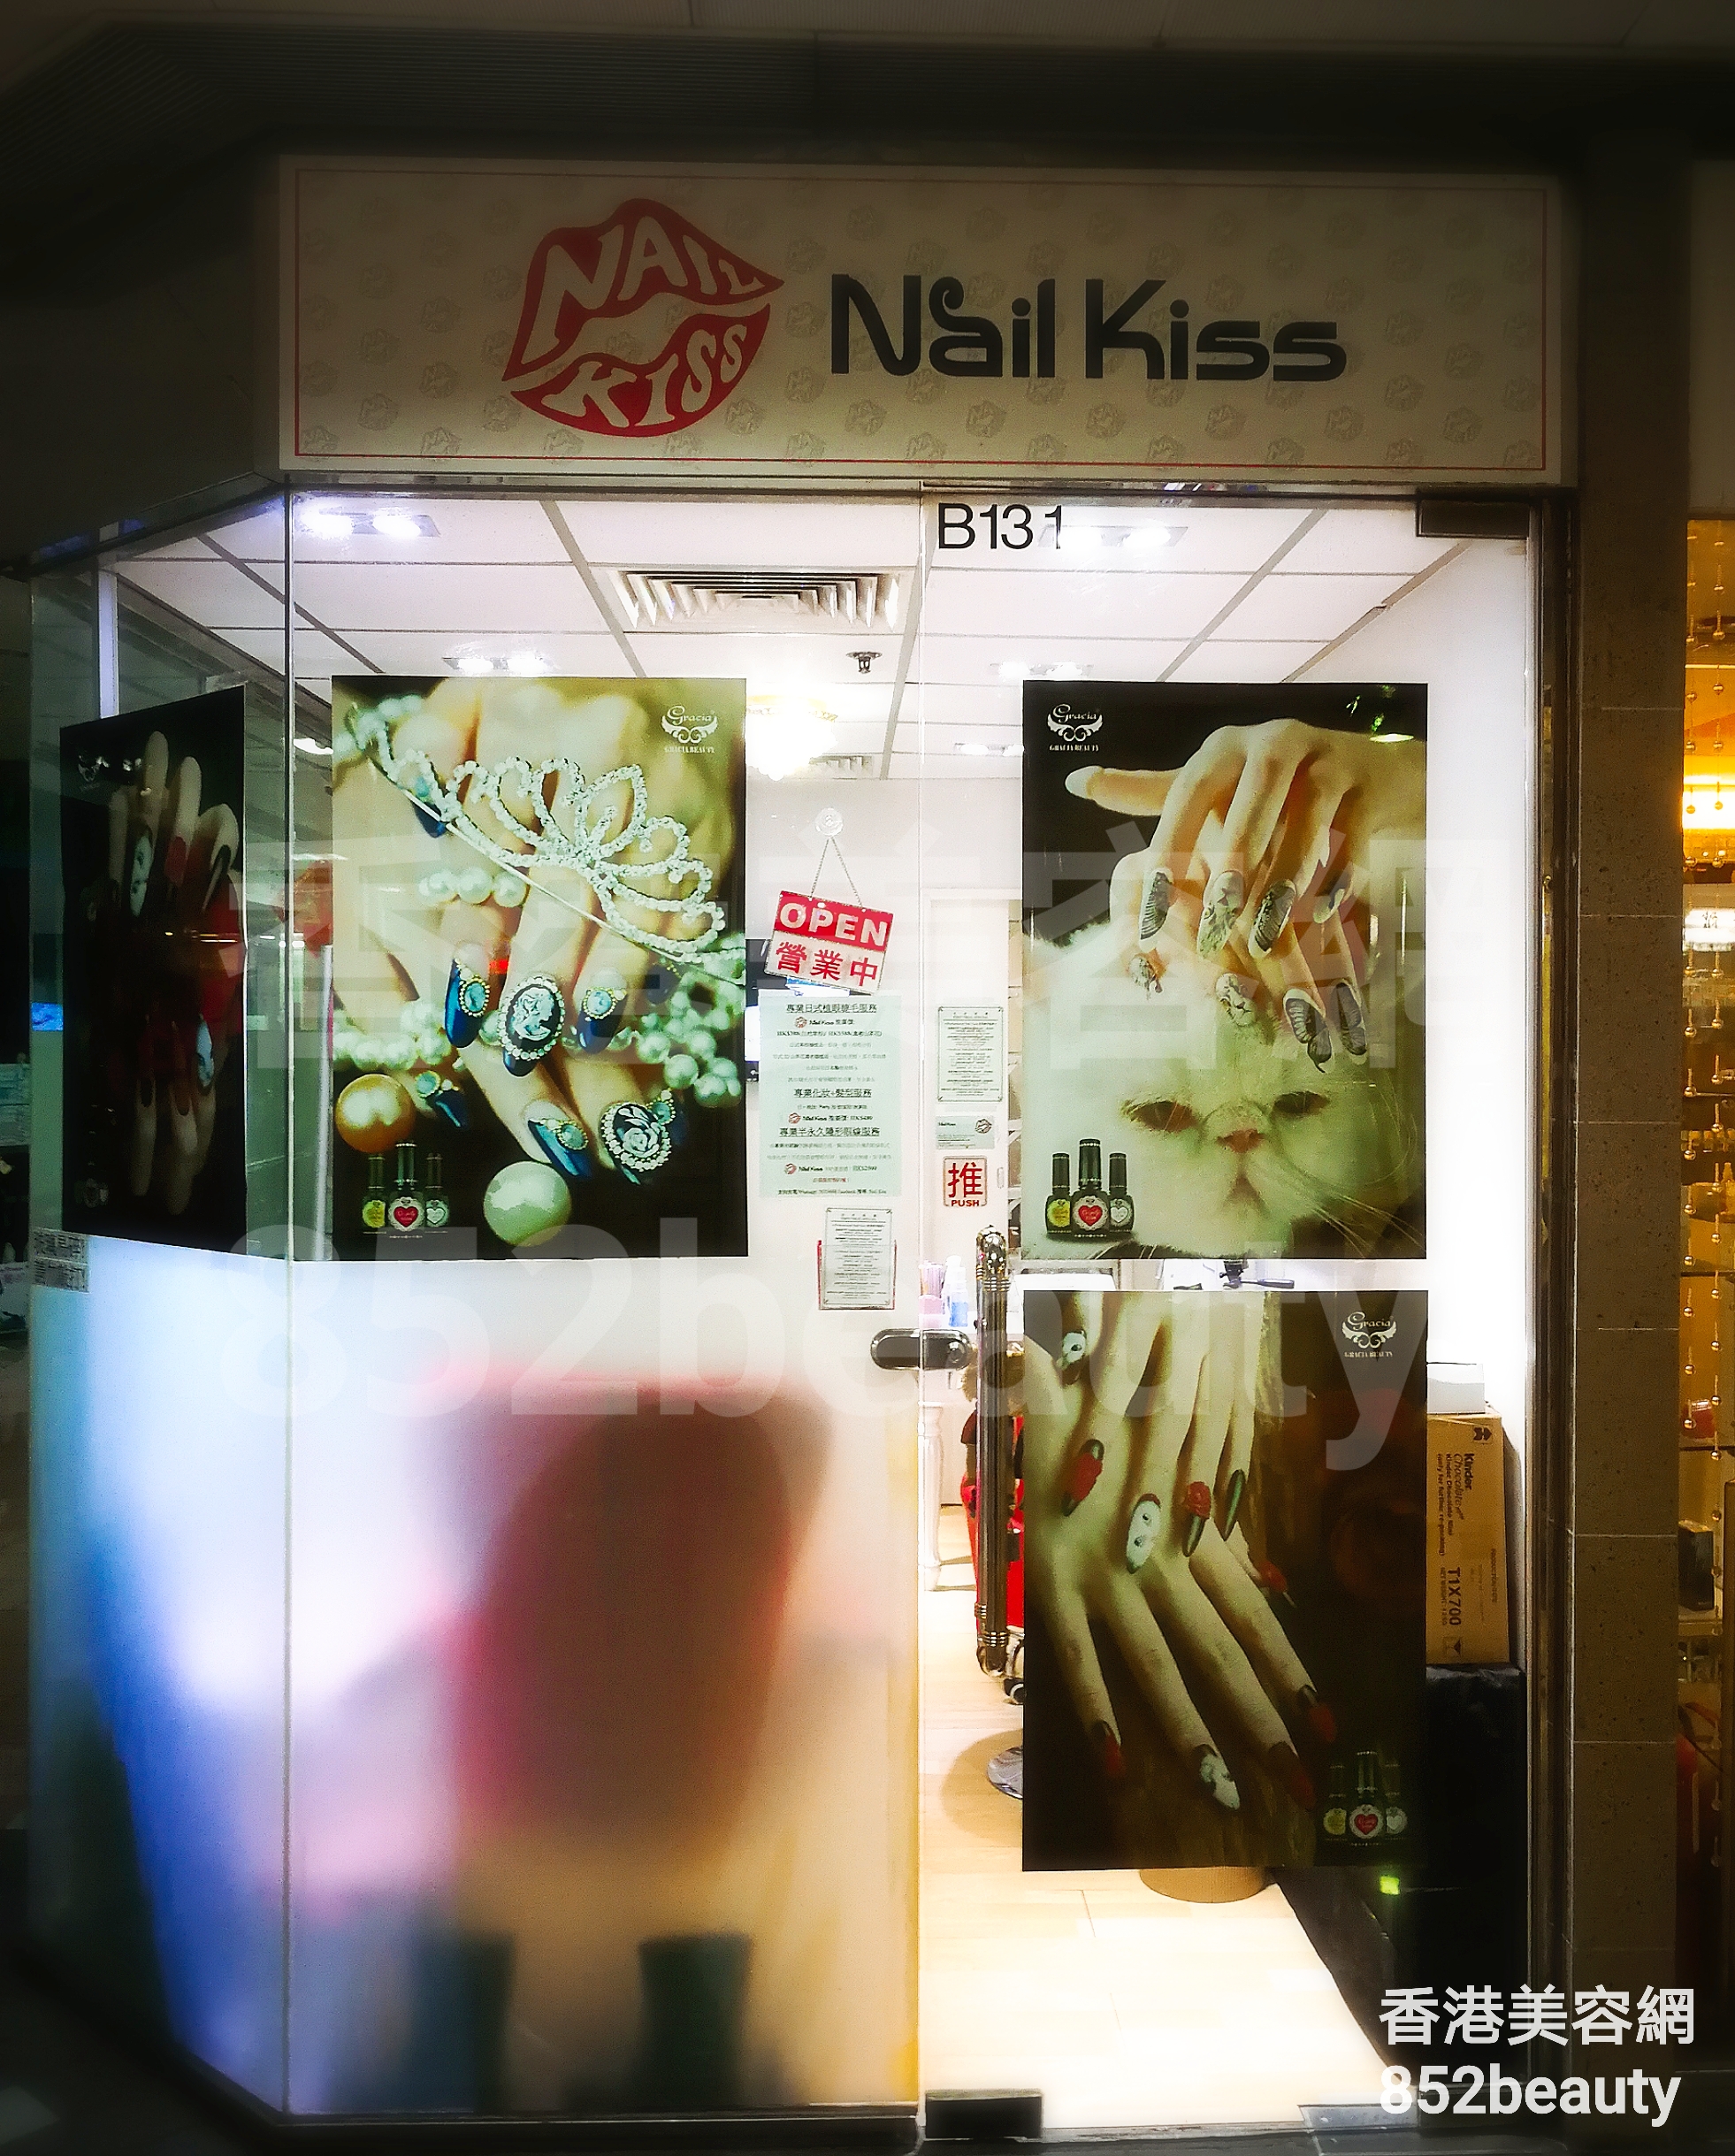 香港美容網 Hong Kong Beauty Salon 美容院 / 美容師: Nail Kiss